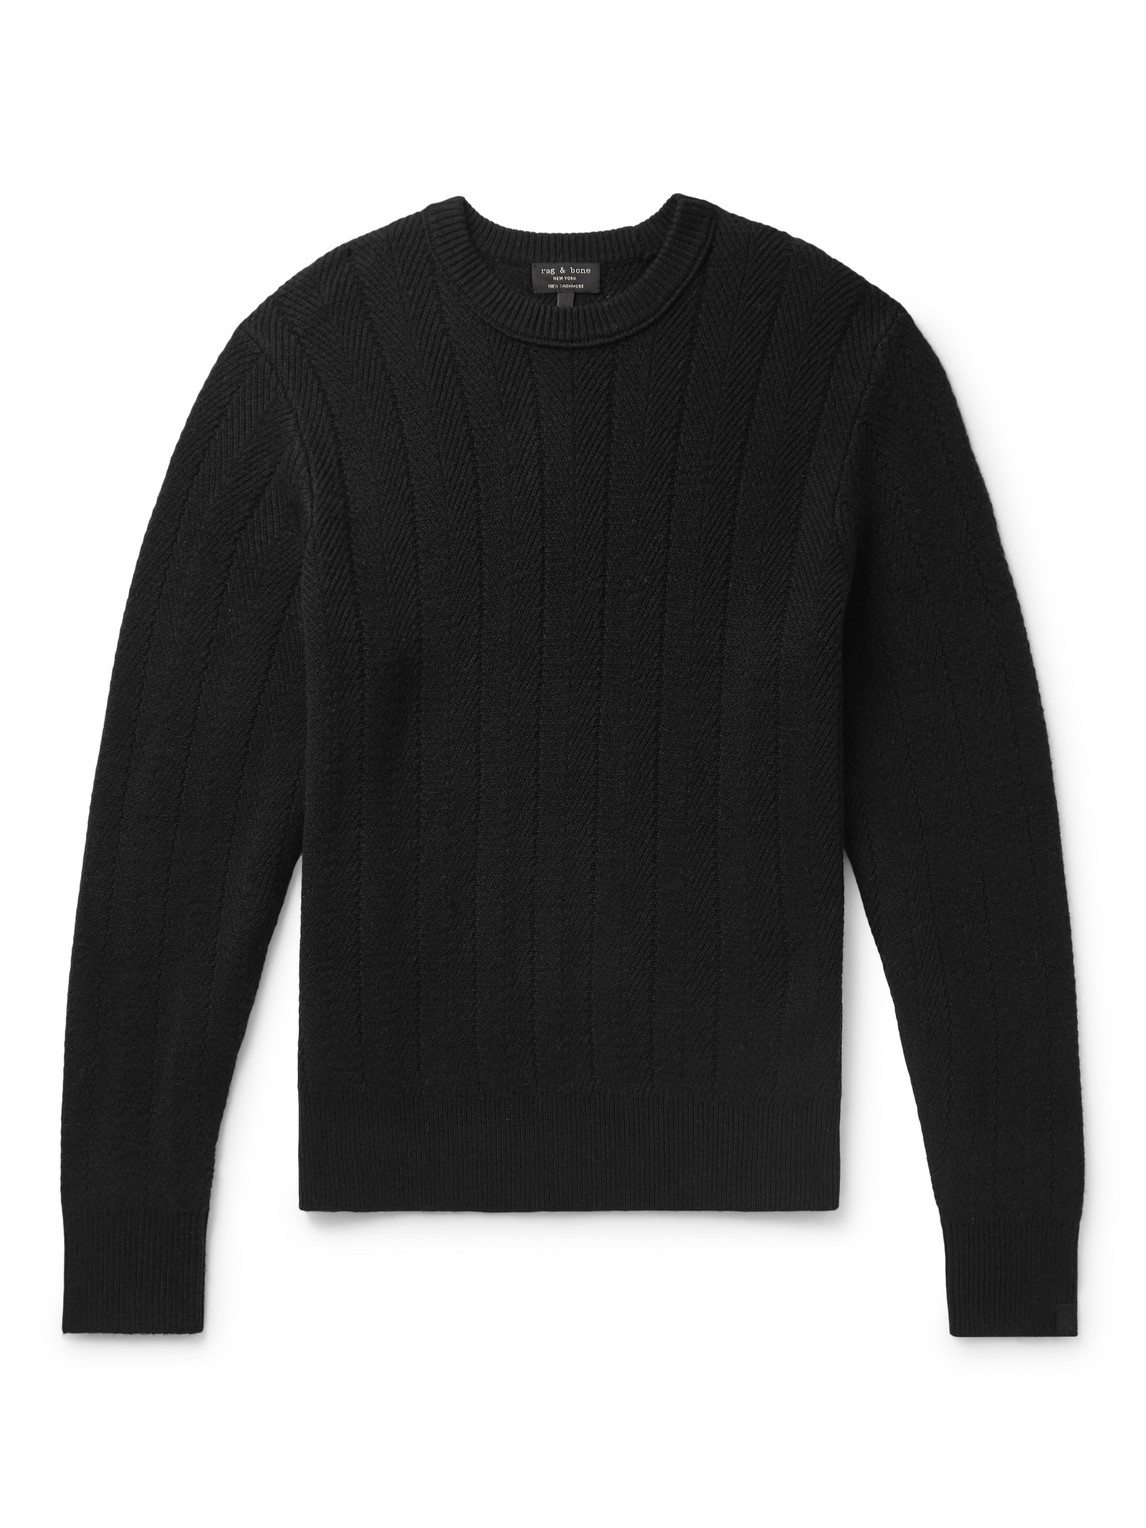 Durham Herringbone Cashmere Sweater